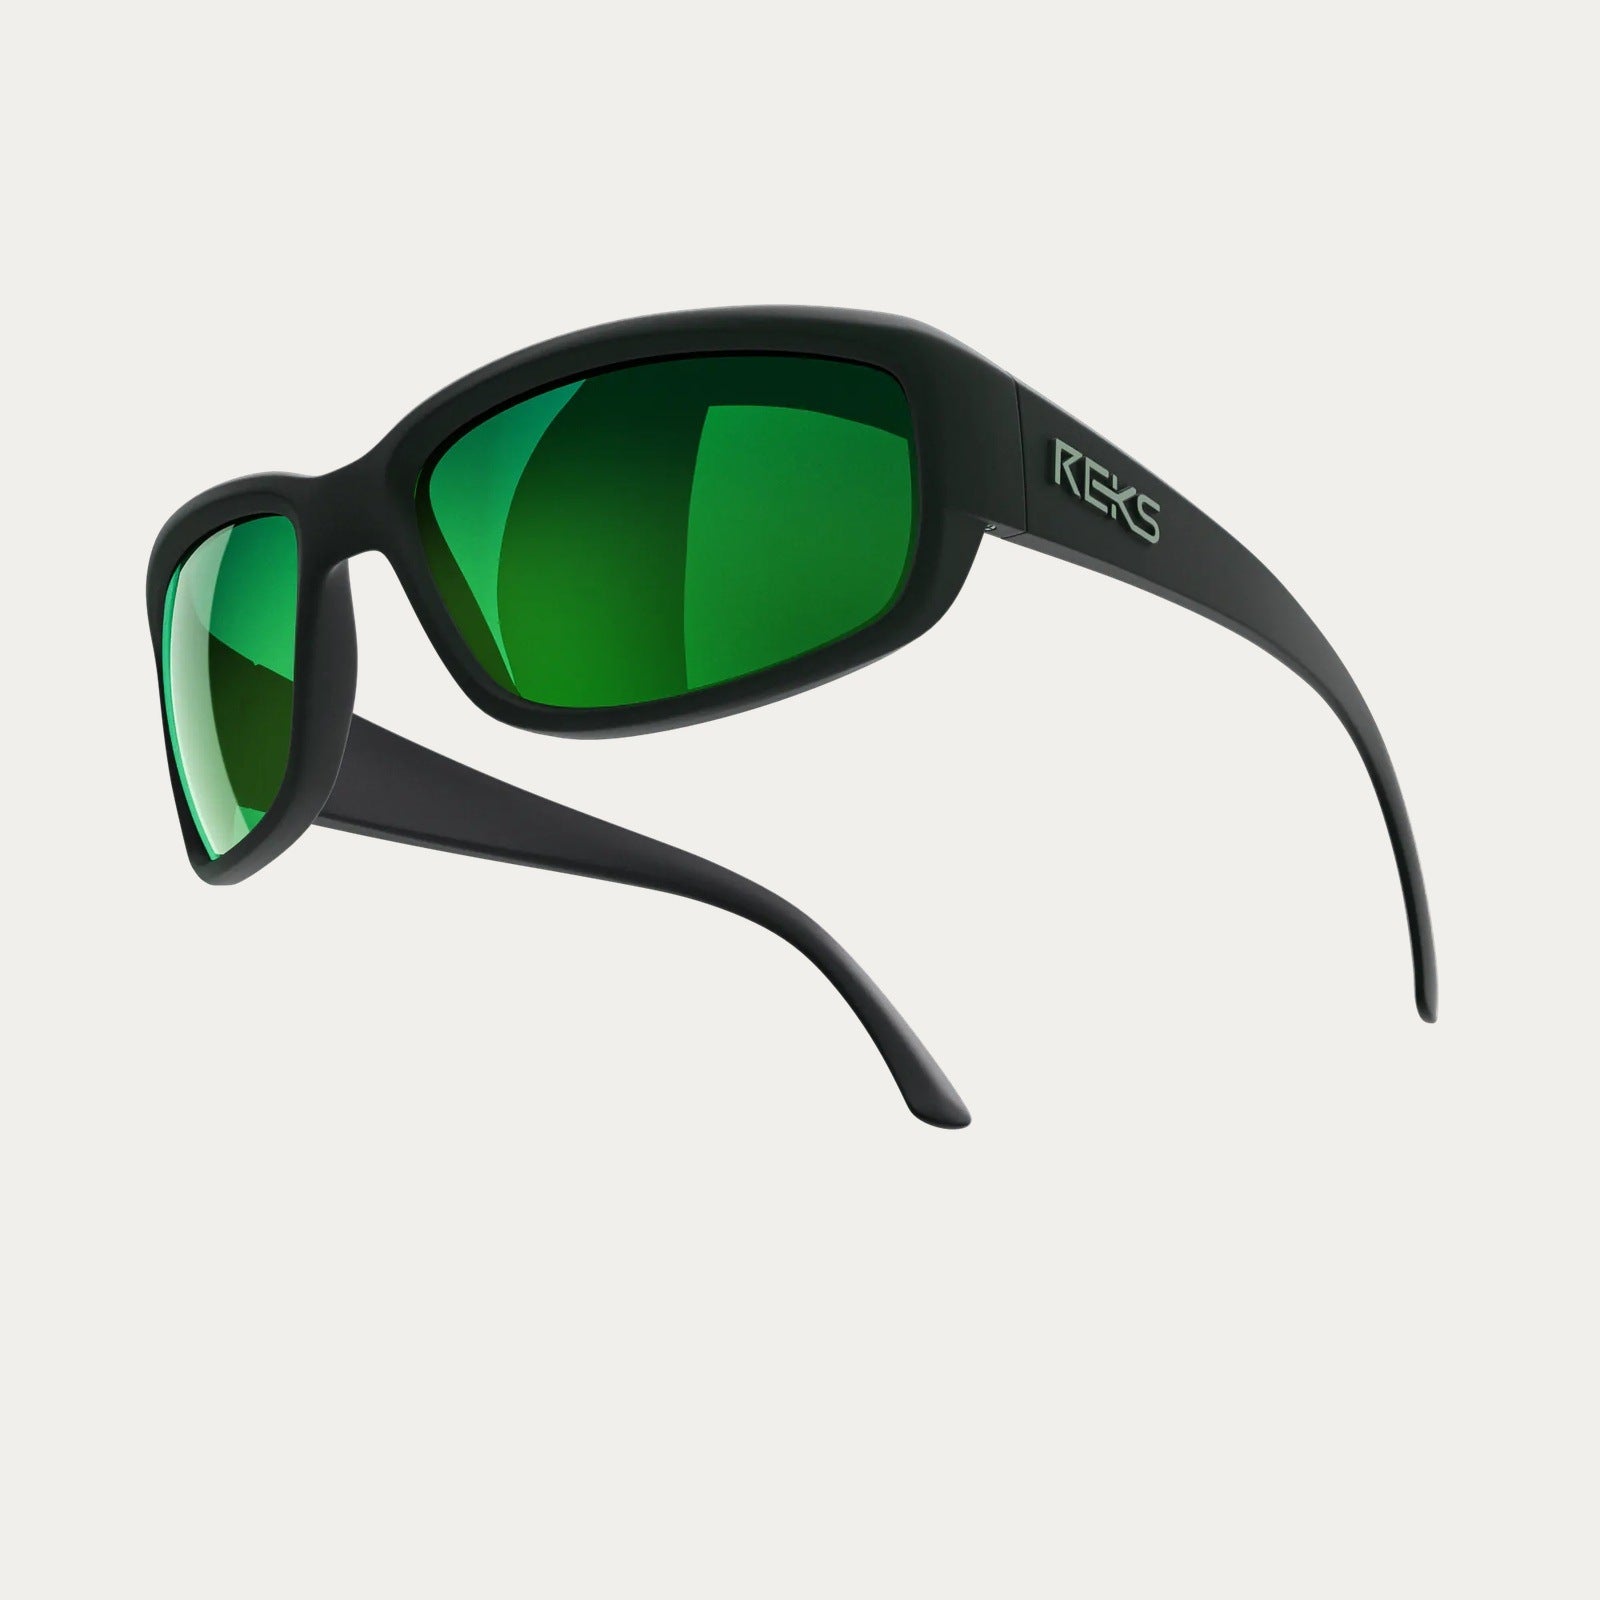 Aviator Polycarbonate Sunglasses with anti-reflective coating – REKS®